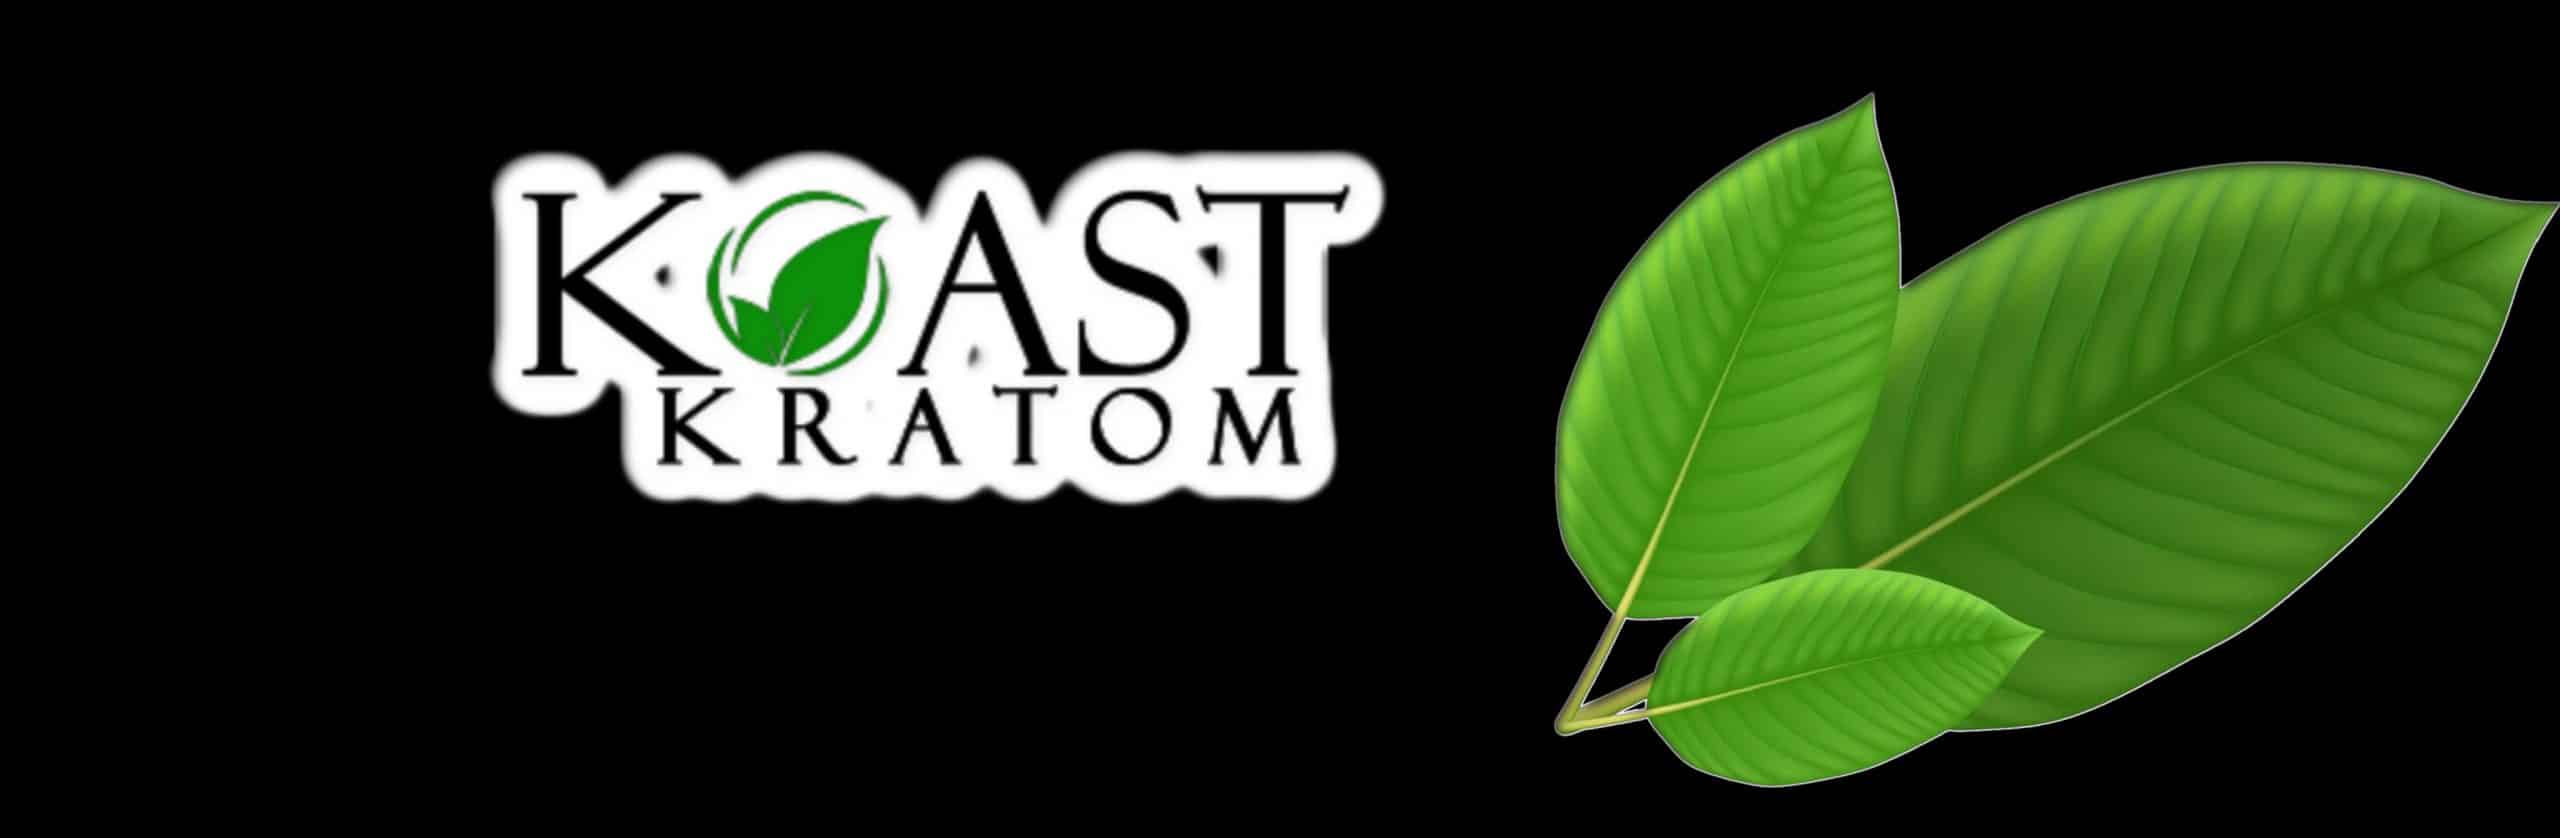 image of koast kratom logo